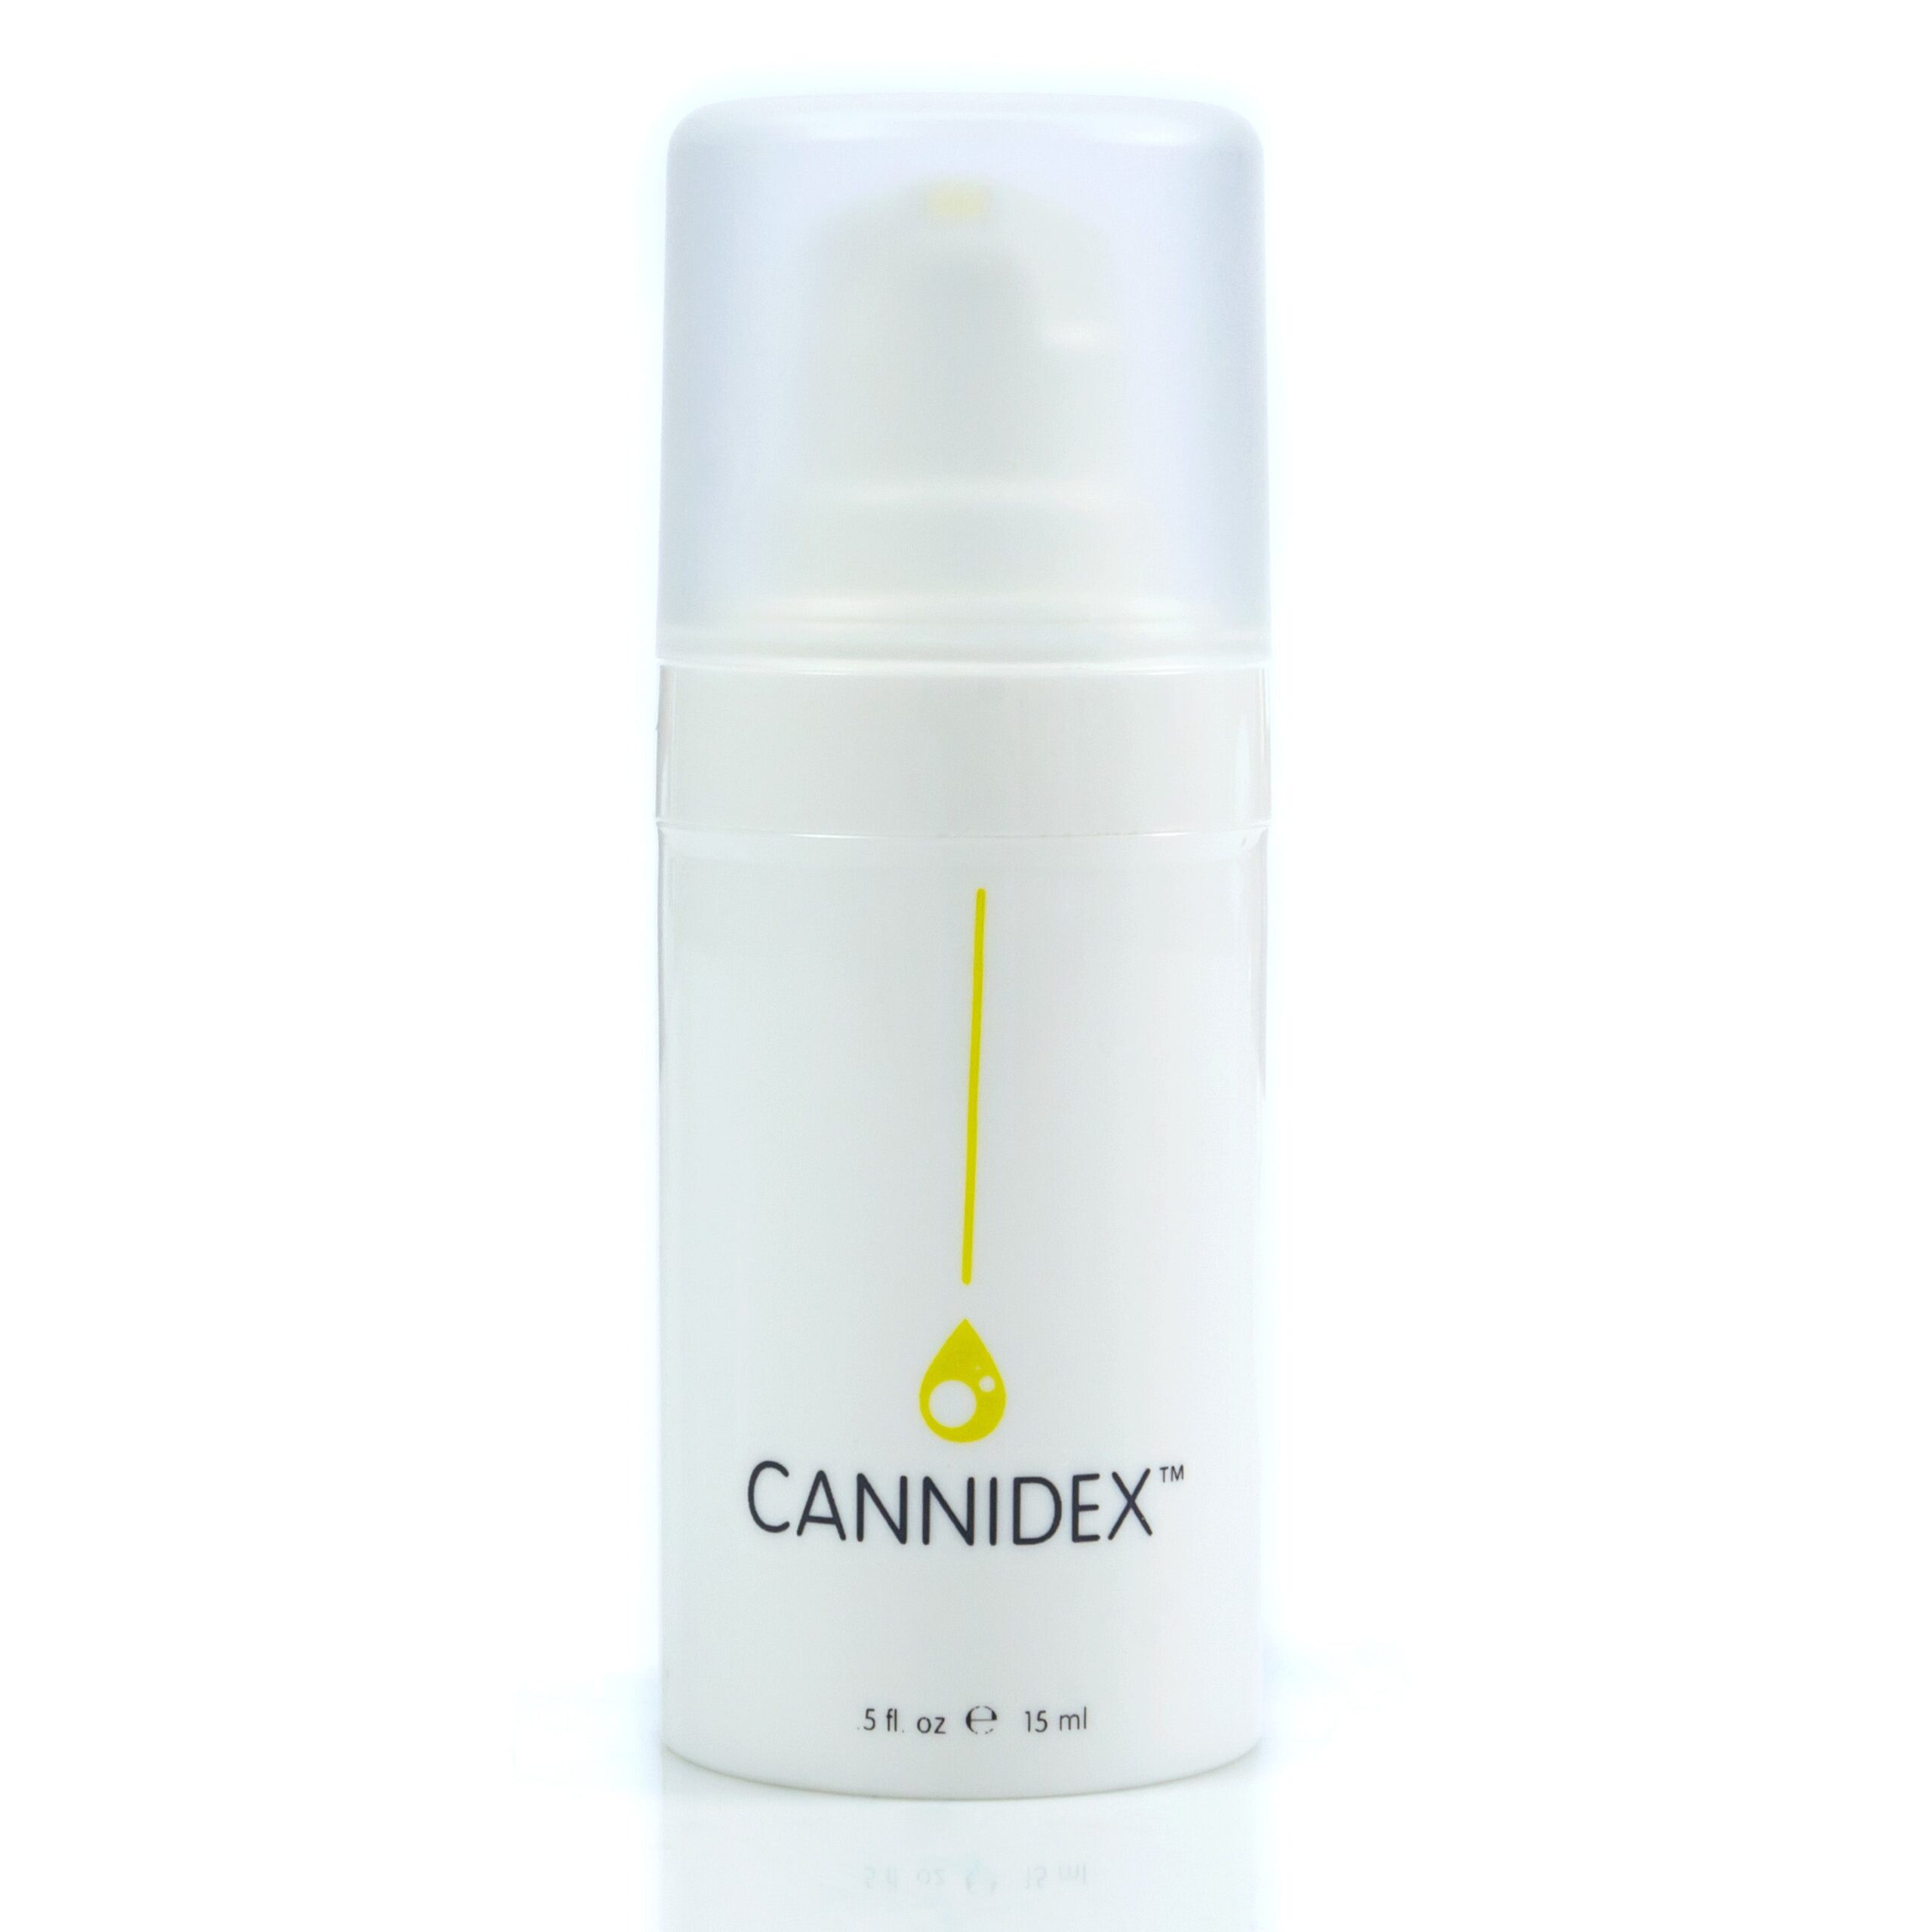 cannidex botle